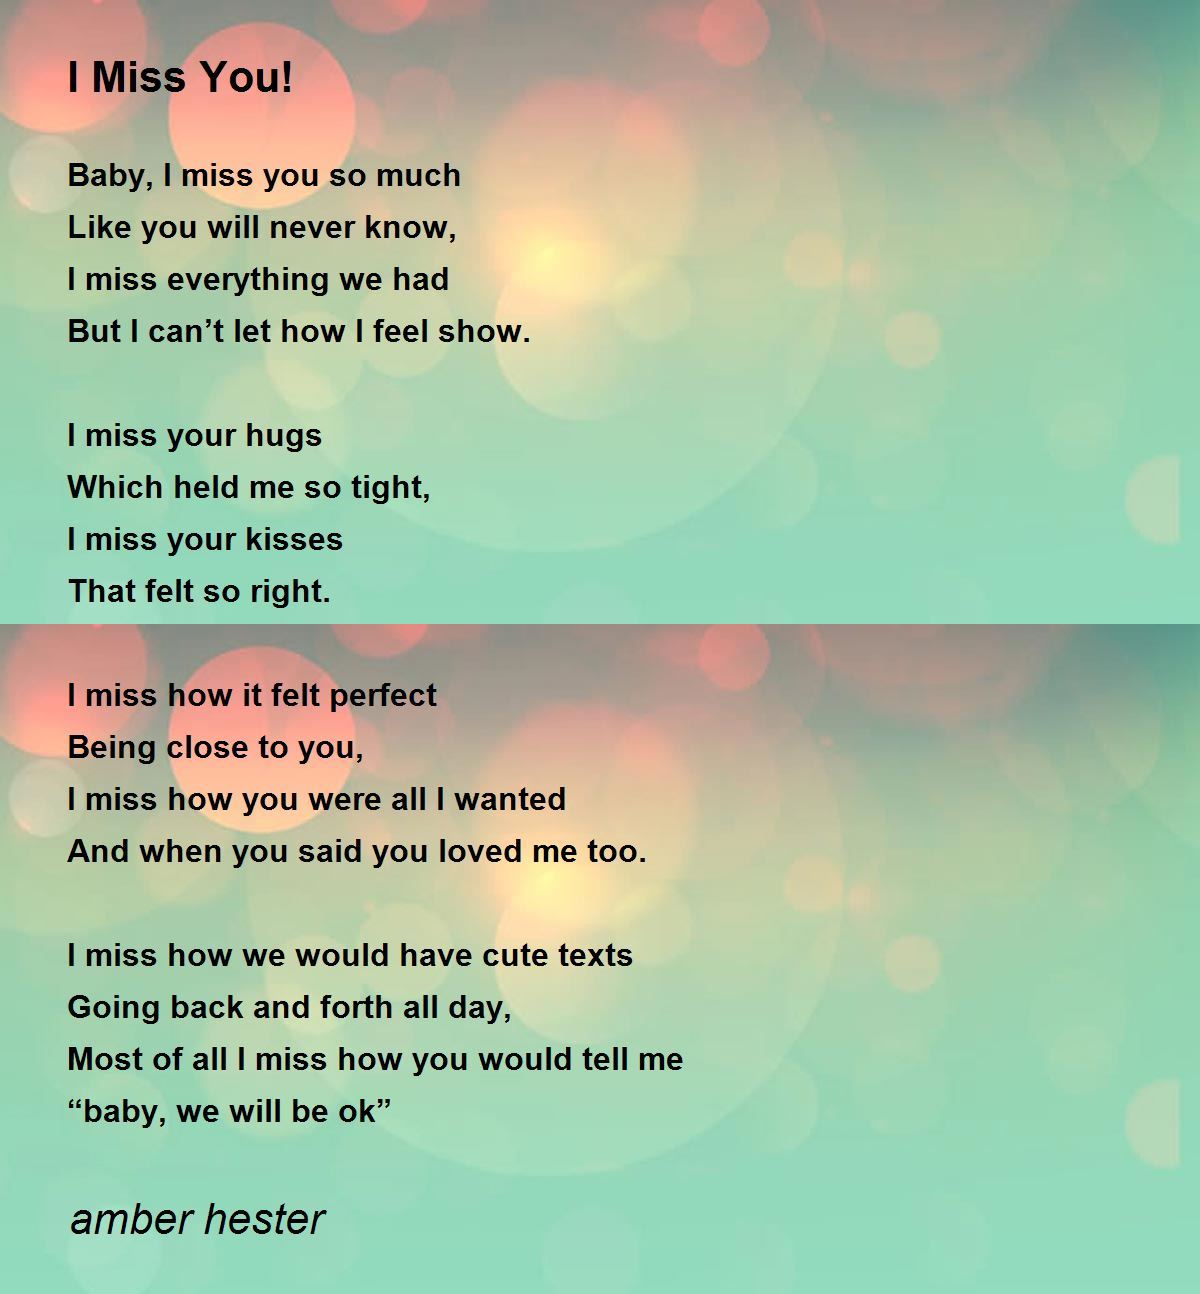 Baby I Miss You So Much - Baby I Miss You So Much Poem by Mosanna Mizan